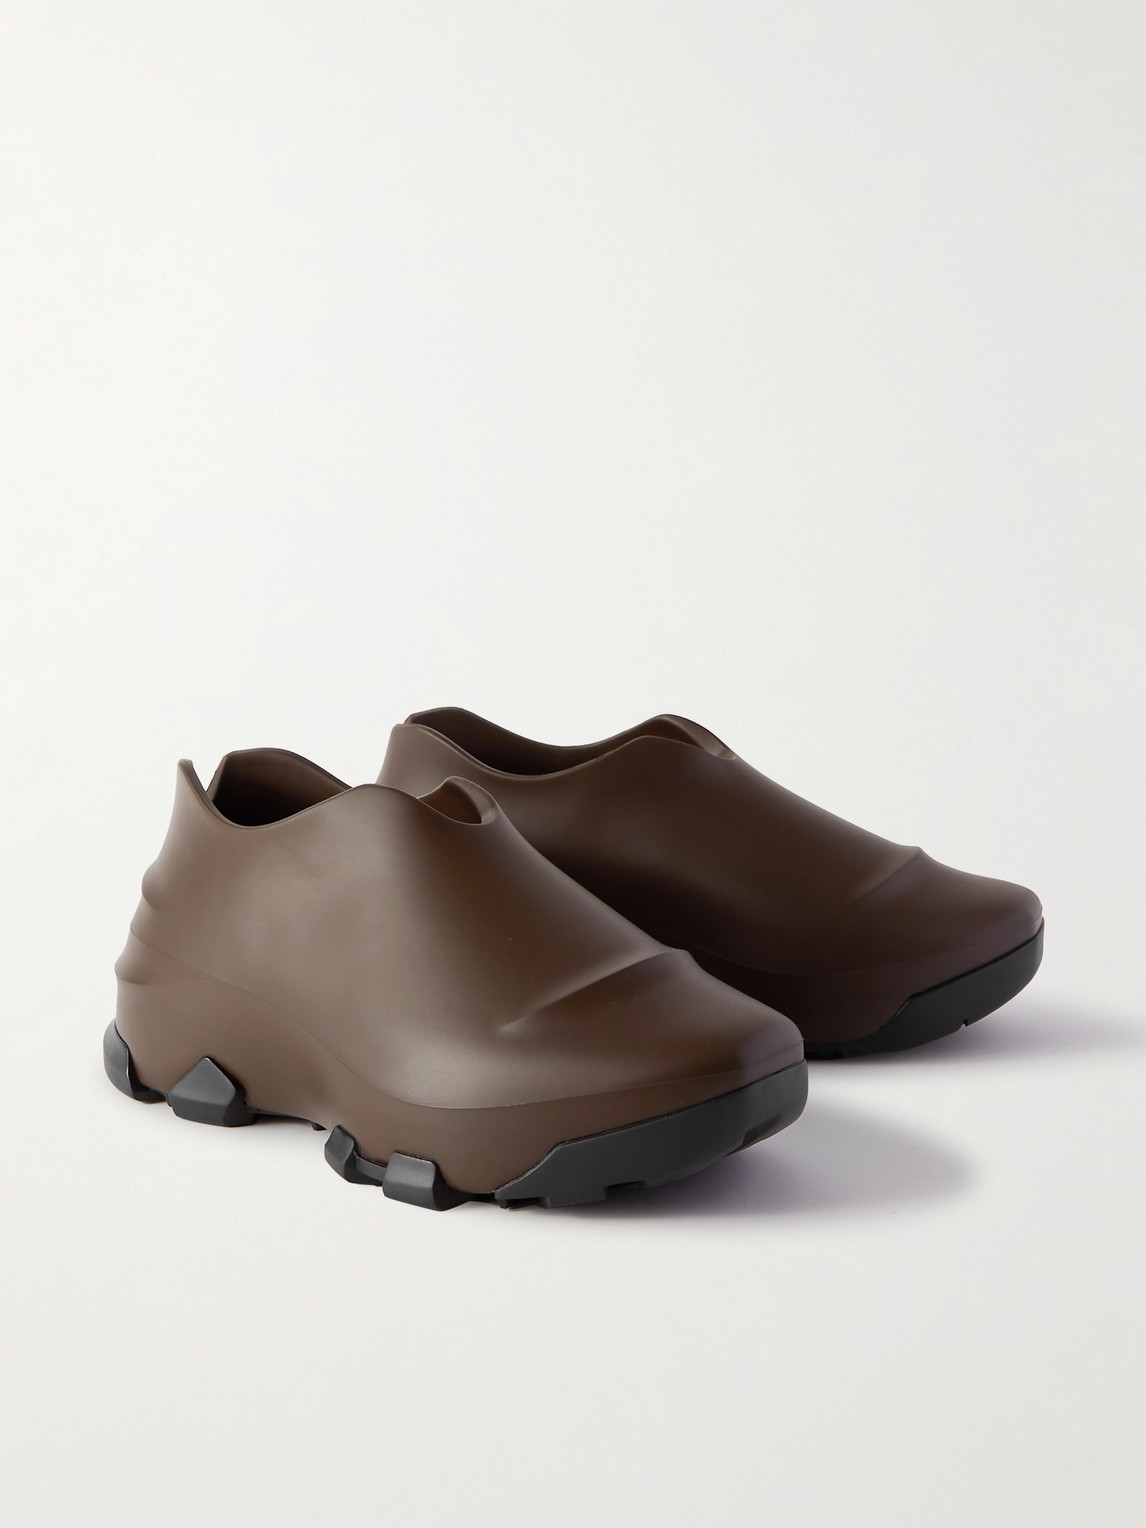 Givenchy - Monumental Mallow Rubber Sneakers - Men - Brown - EU 41 for Men